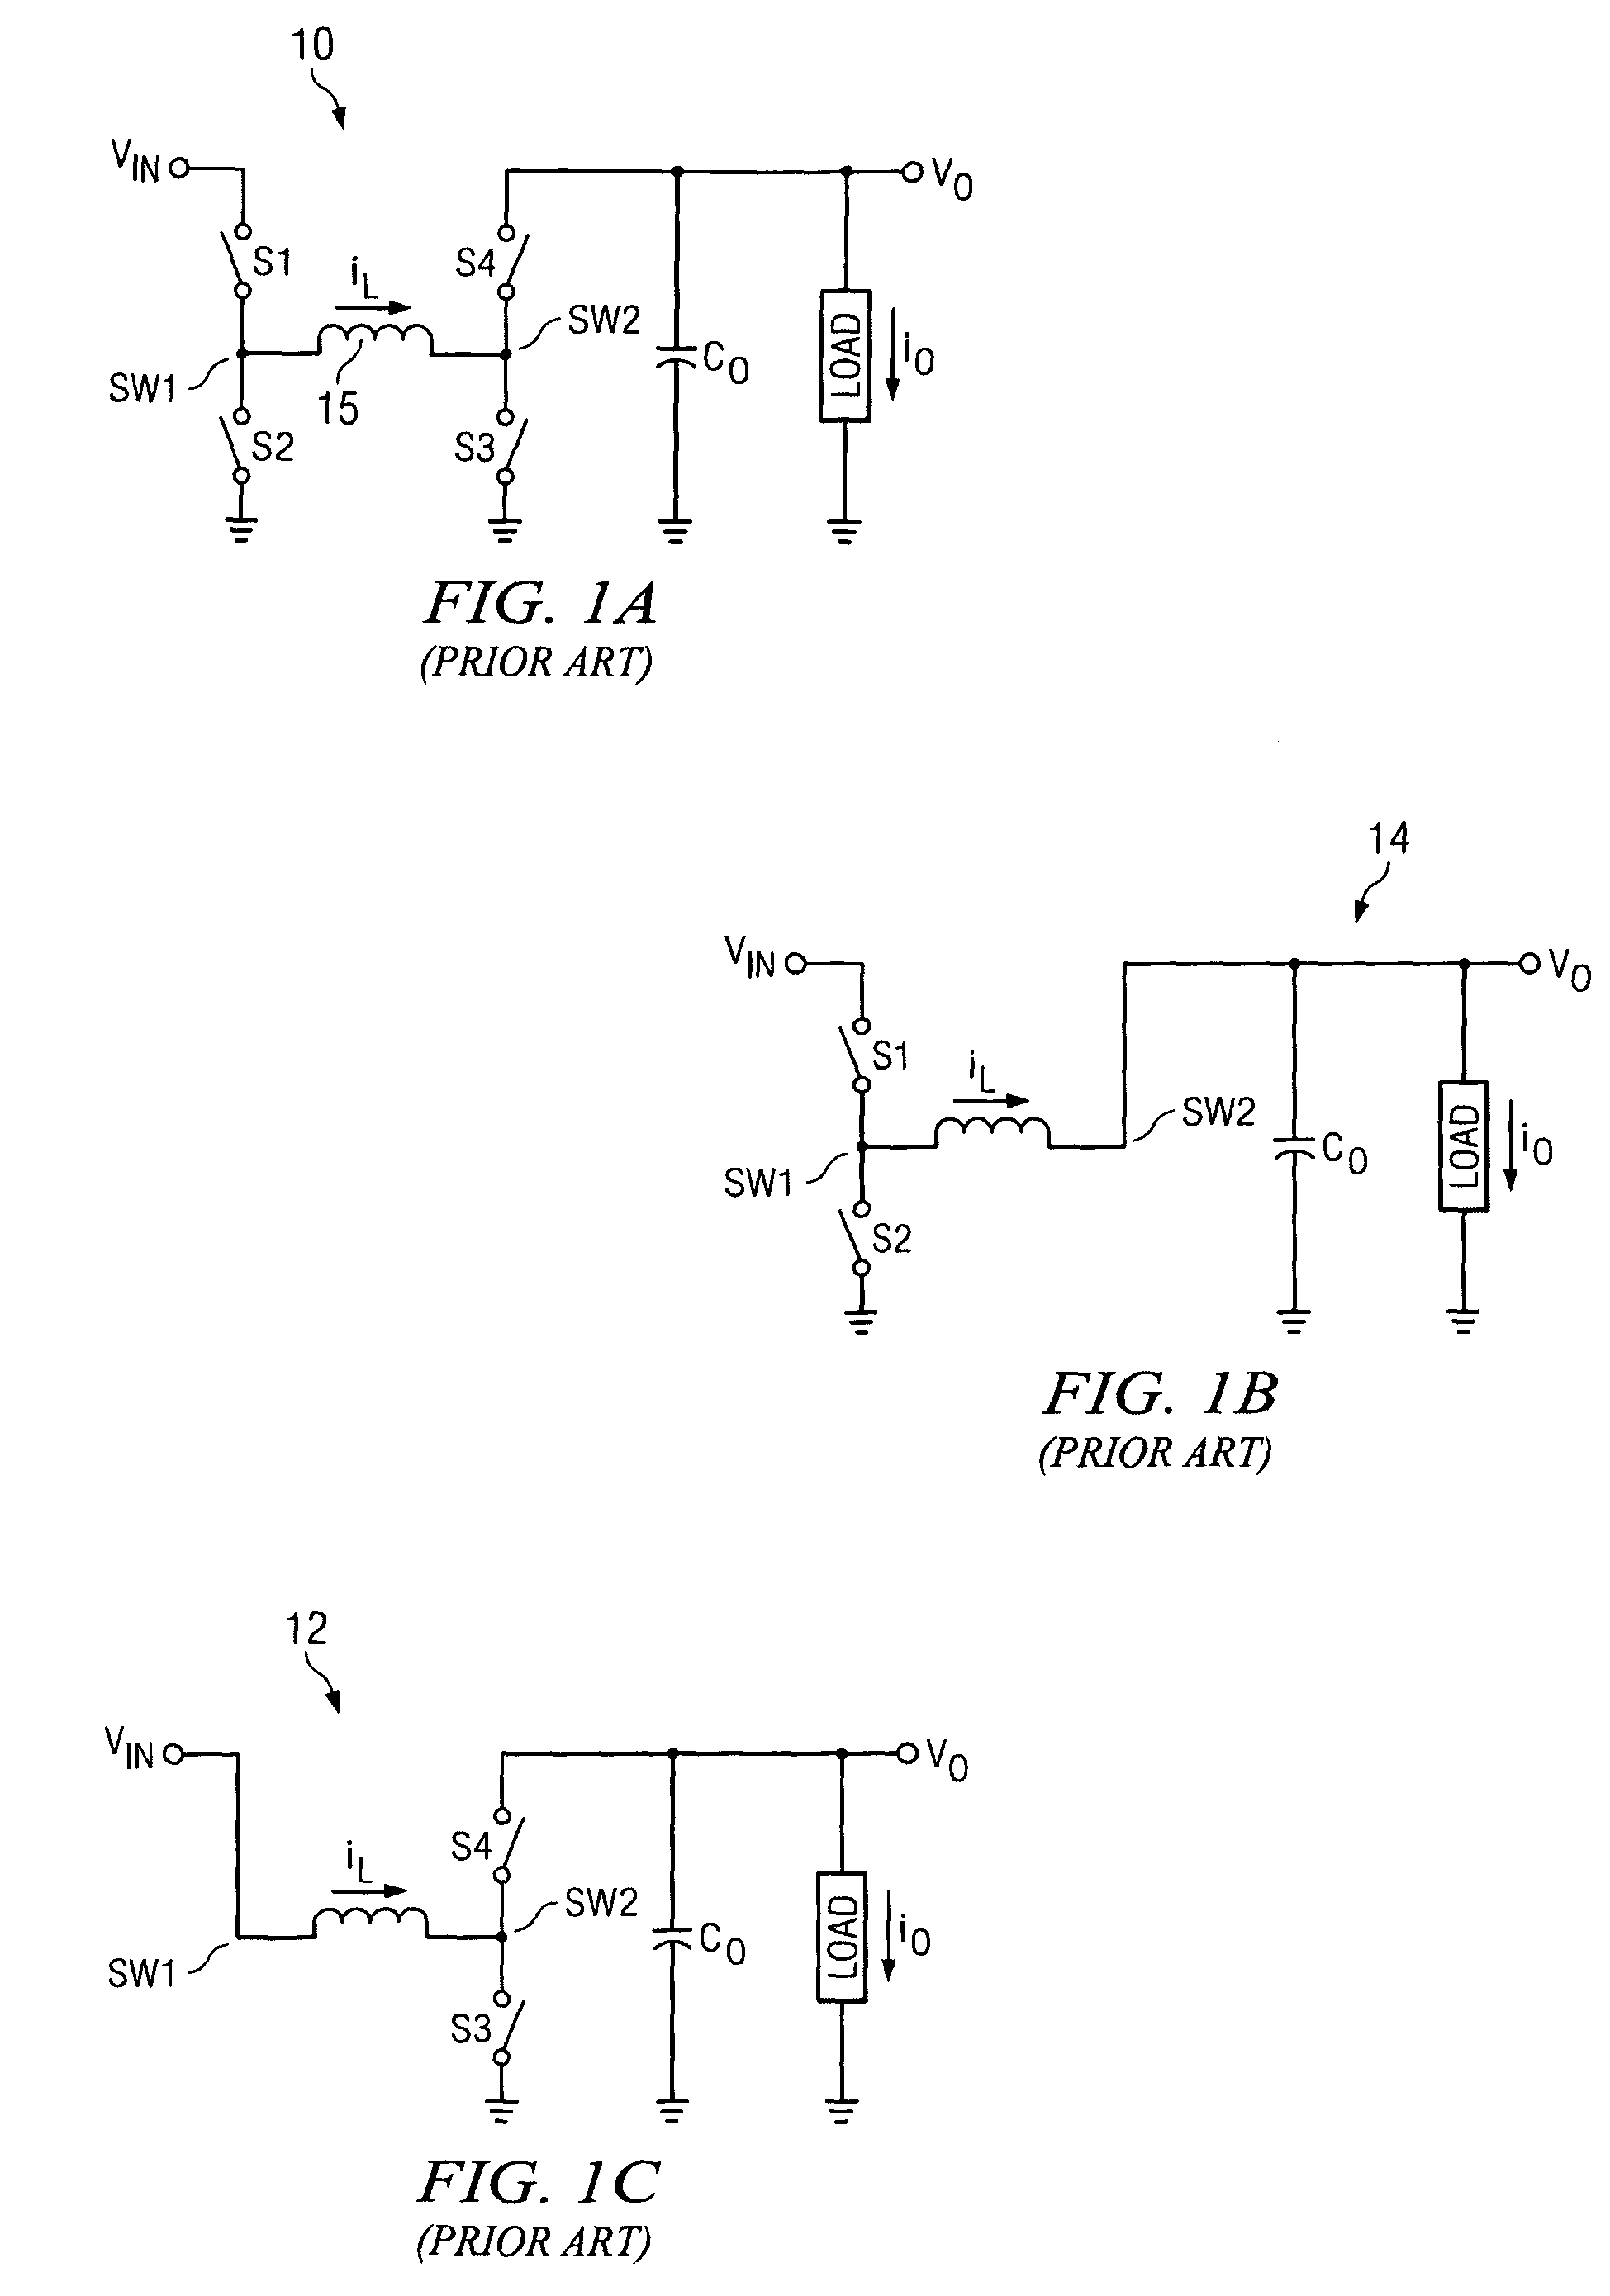 Multiple switch node power converter control scheme that avoids switching sub-harmonics